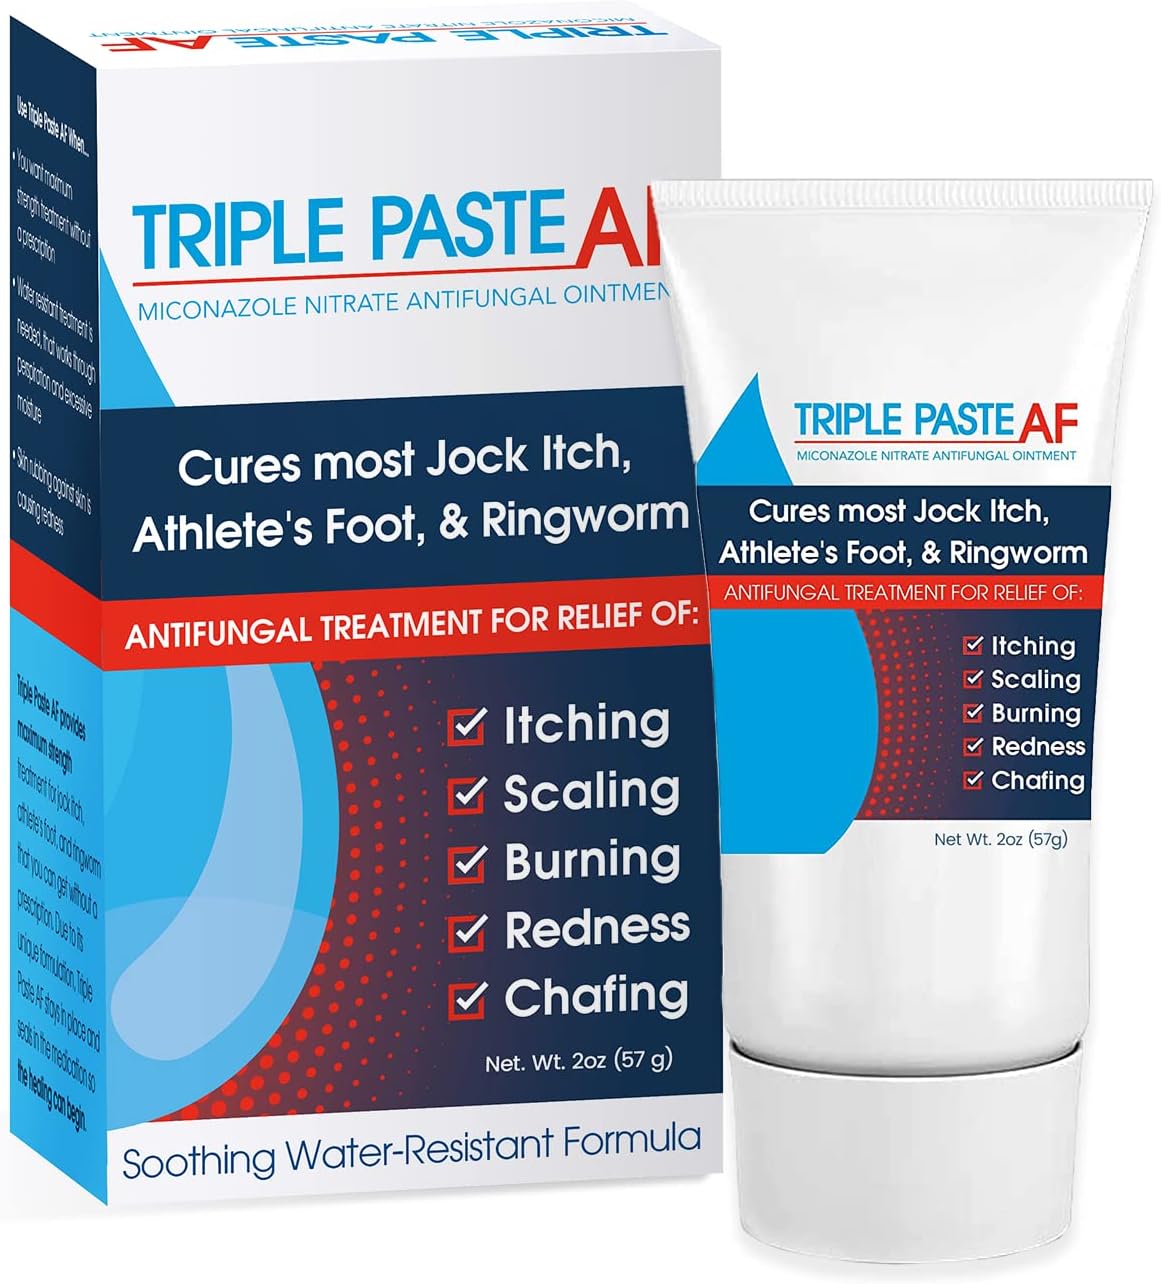 Triple Paste AF Antifungal Ointment (2% Miconazole Nitrate